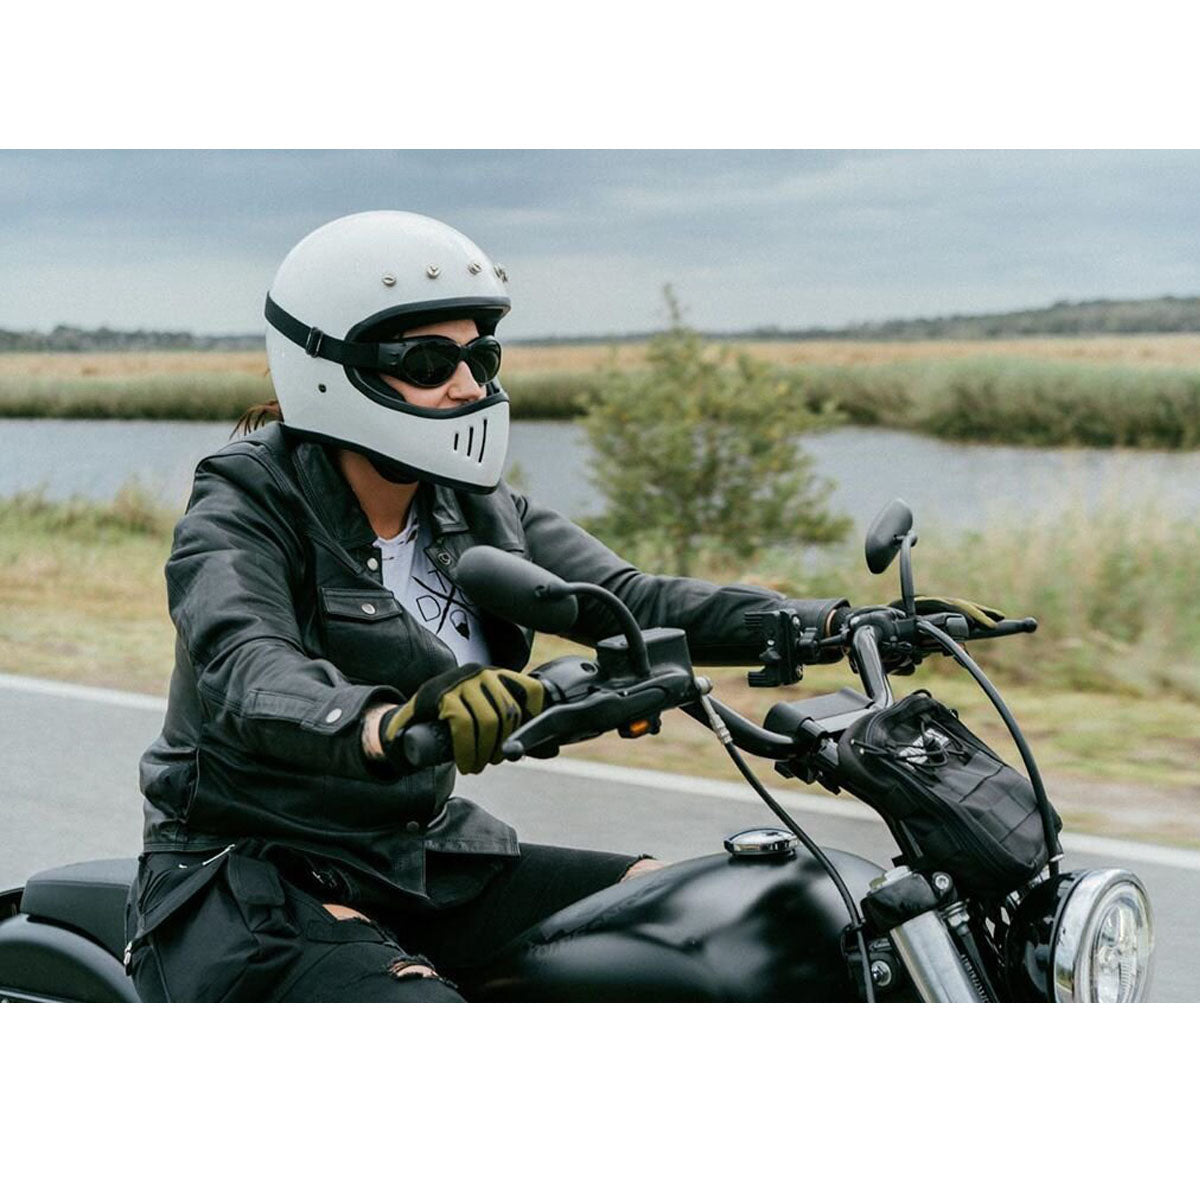 Onyx - Women's Leather Motorcycle Shirt